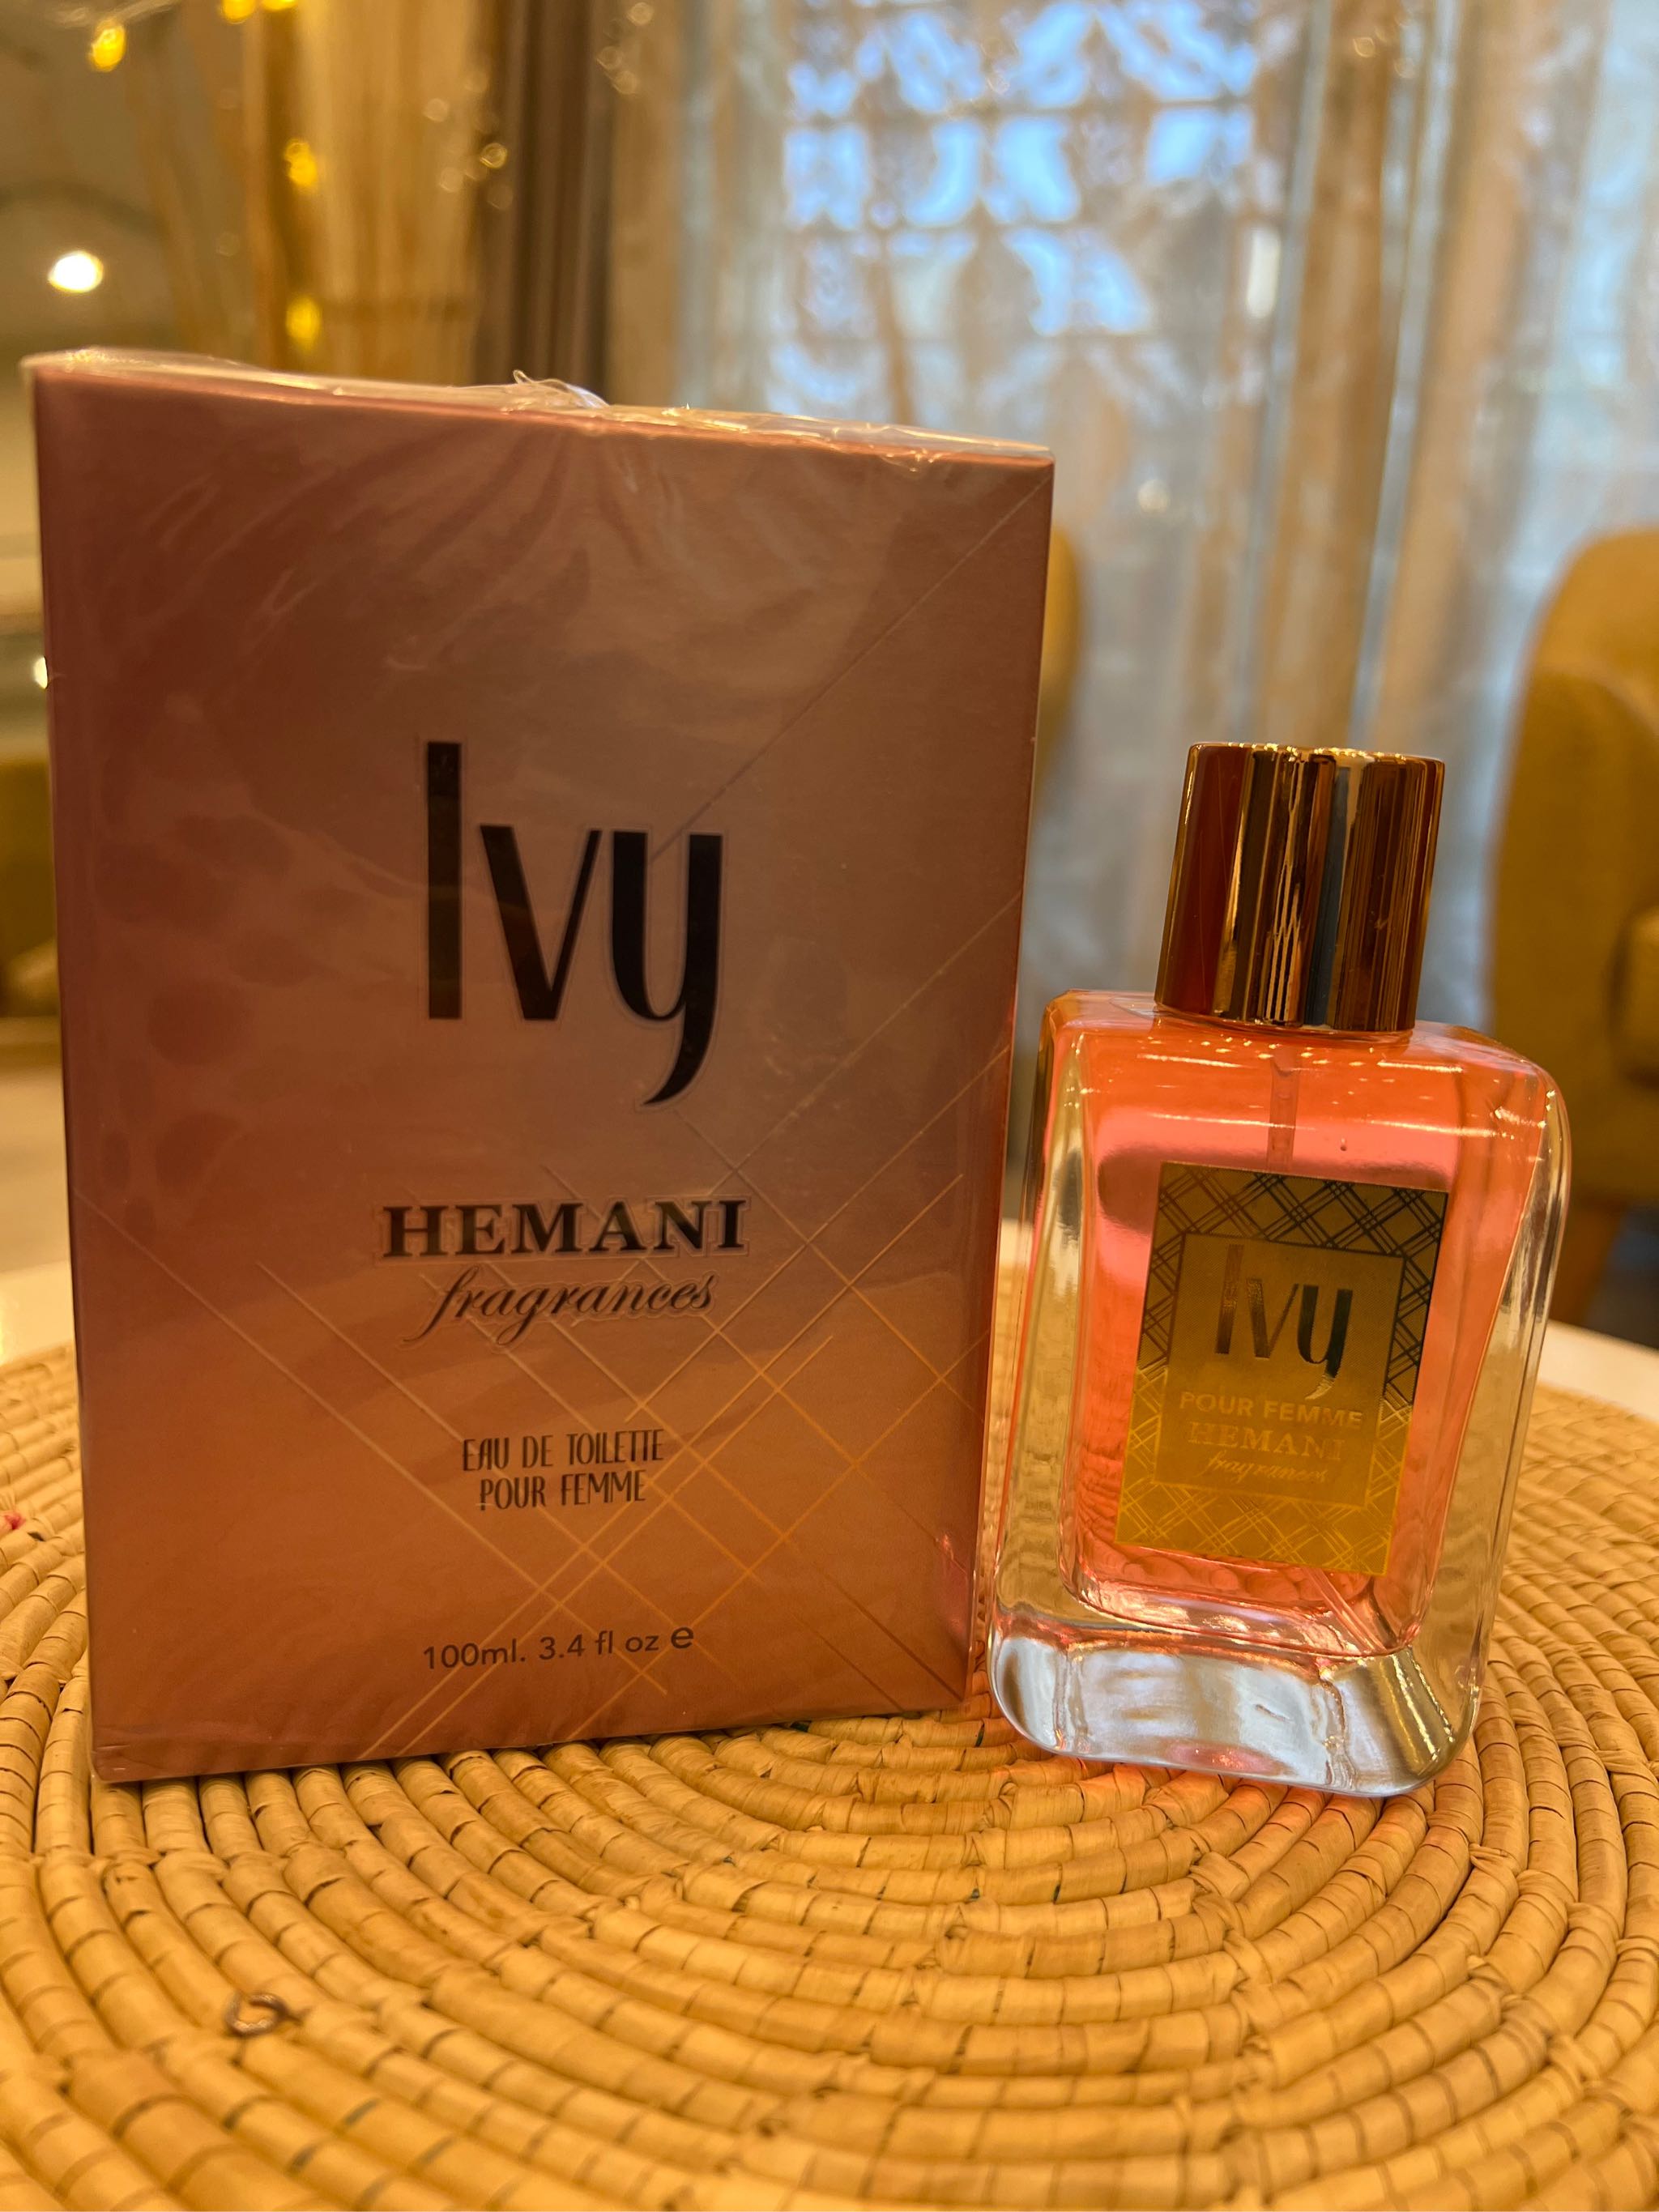 𝐇𝐞𝐦𝐚𝐧𝐢 𝐅𝐫𝐚𝐠𝐫𝐚𝐧𝐜𝐞𝐬 - Ivy Perfume for Women 100Ml